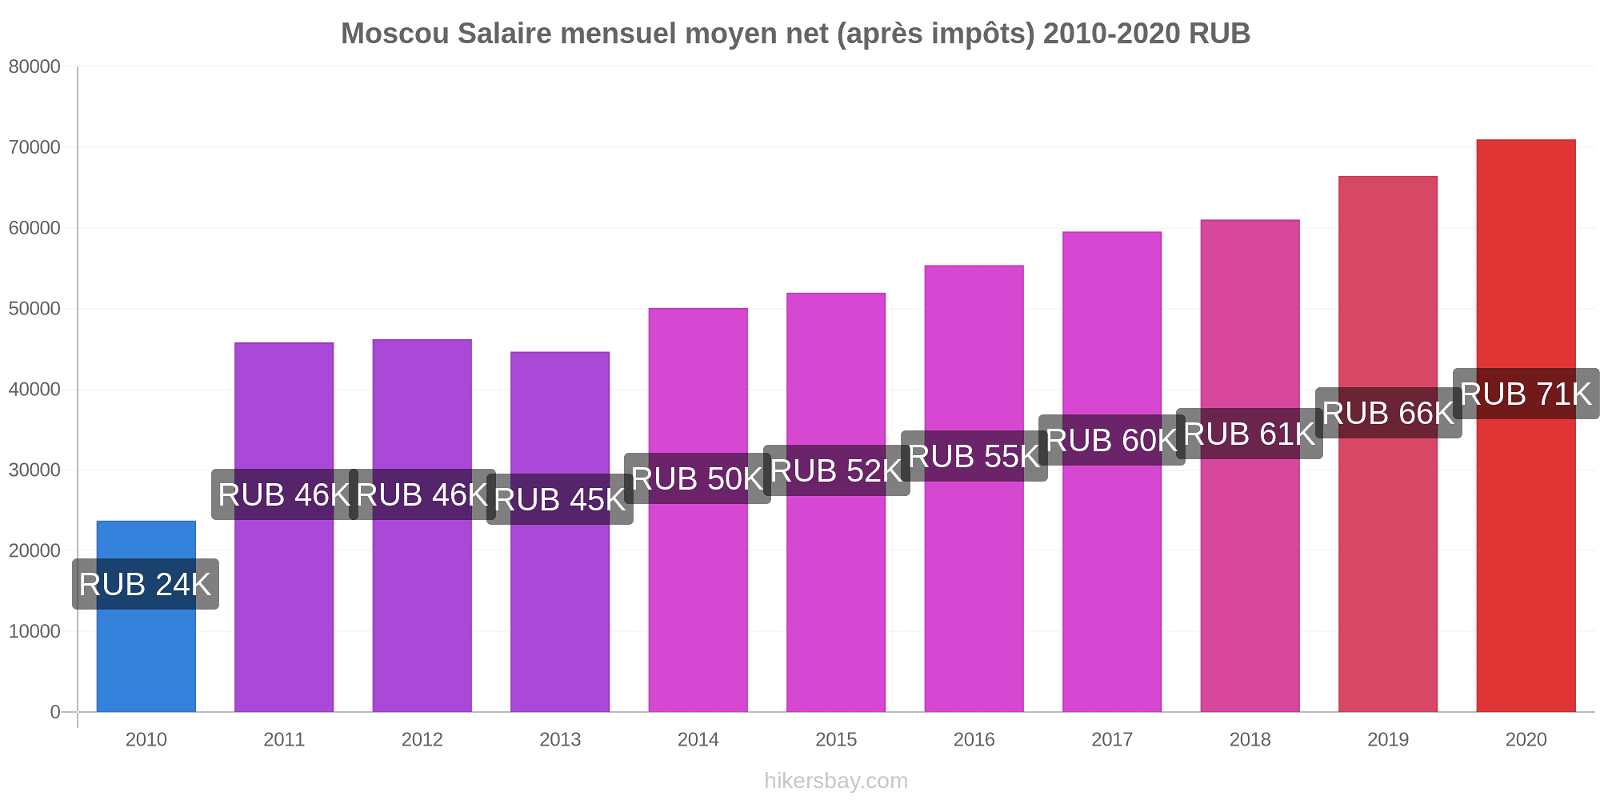 Moscou changements de prix Salaire mensuel Net (après impôts) hikersbay.com